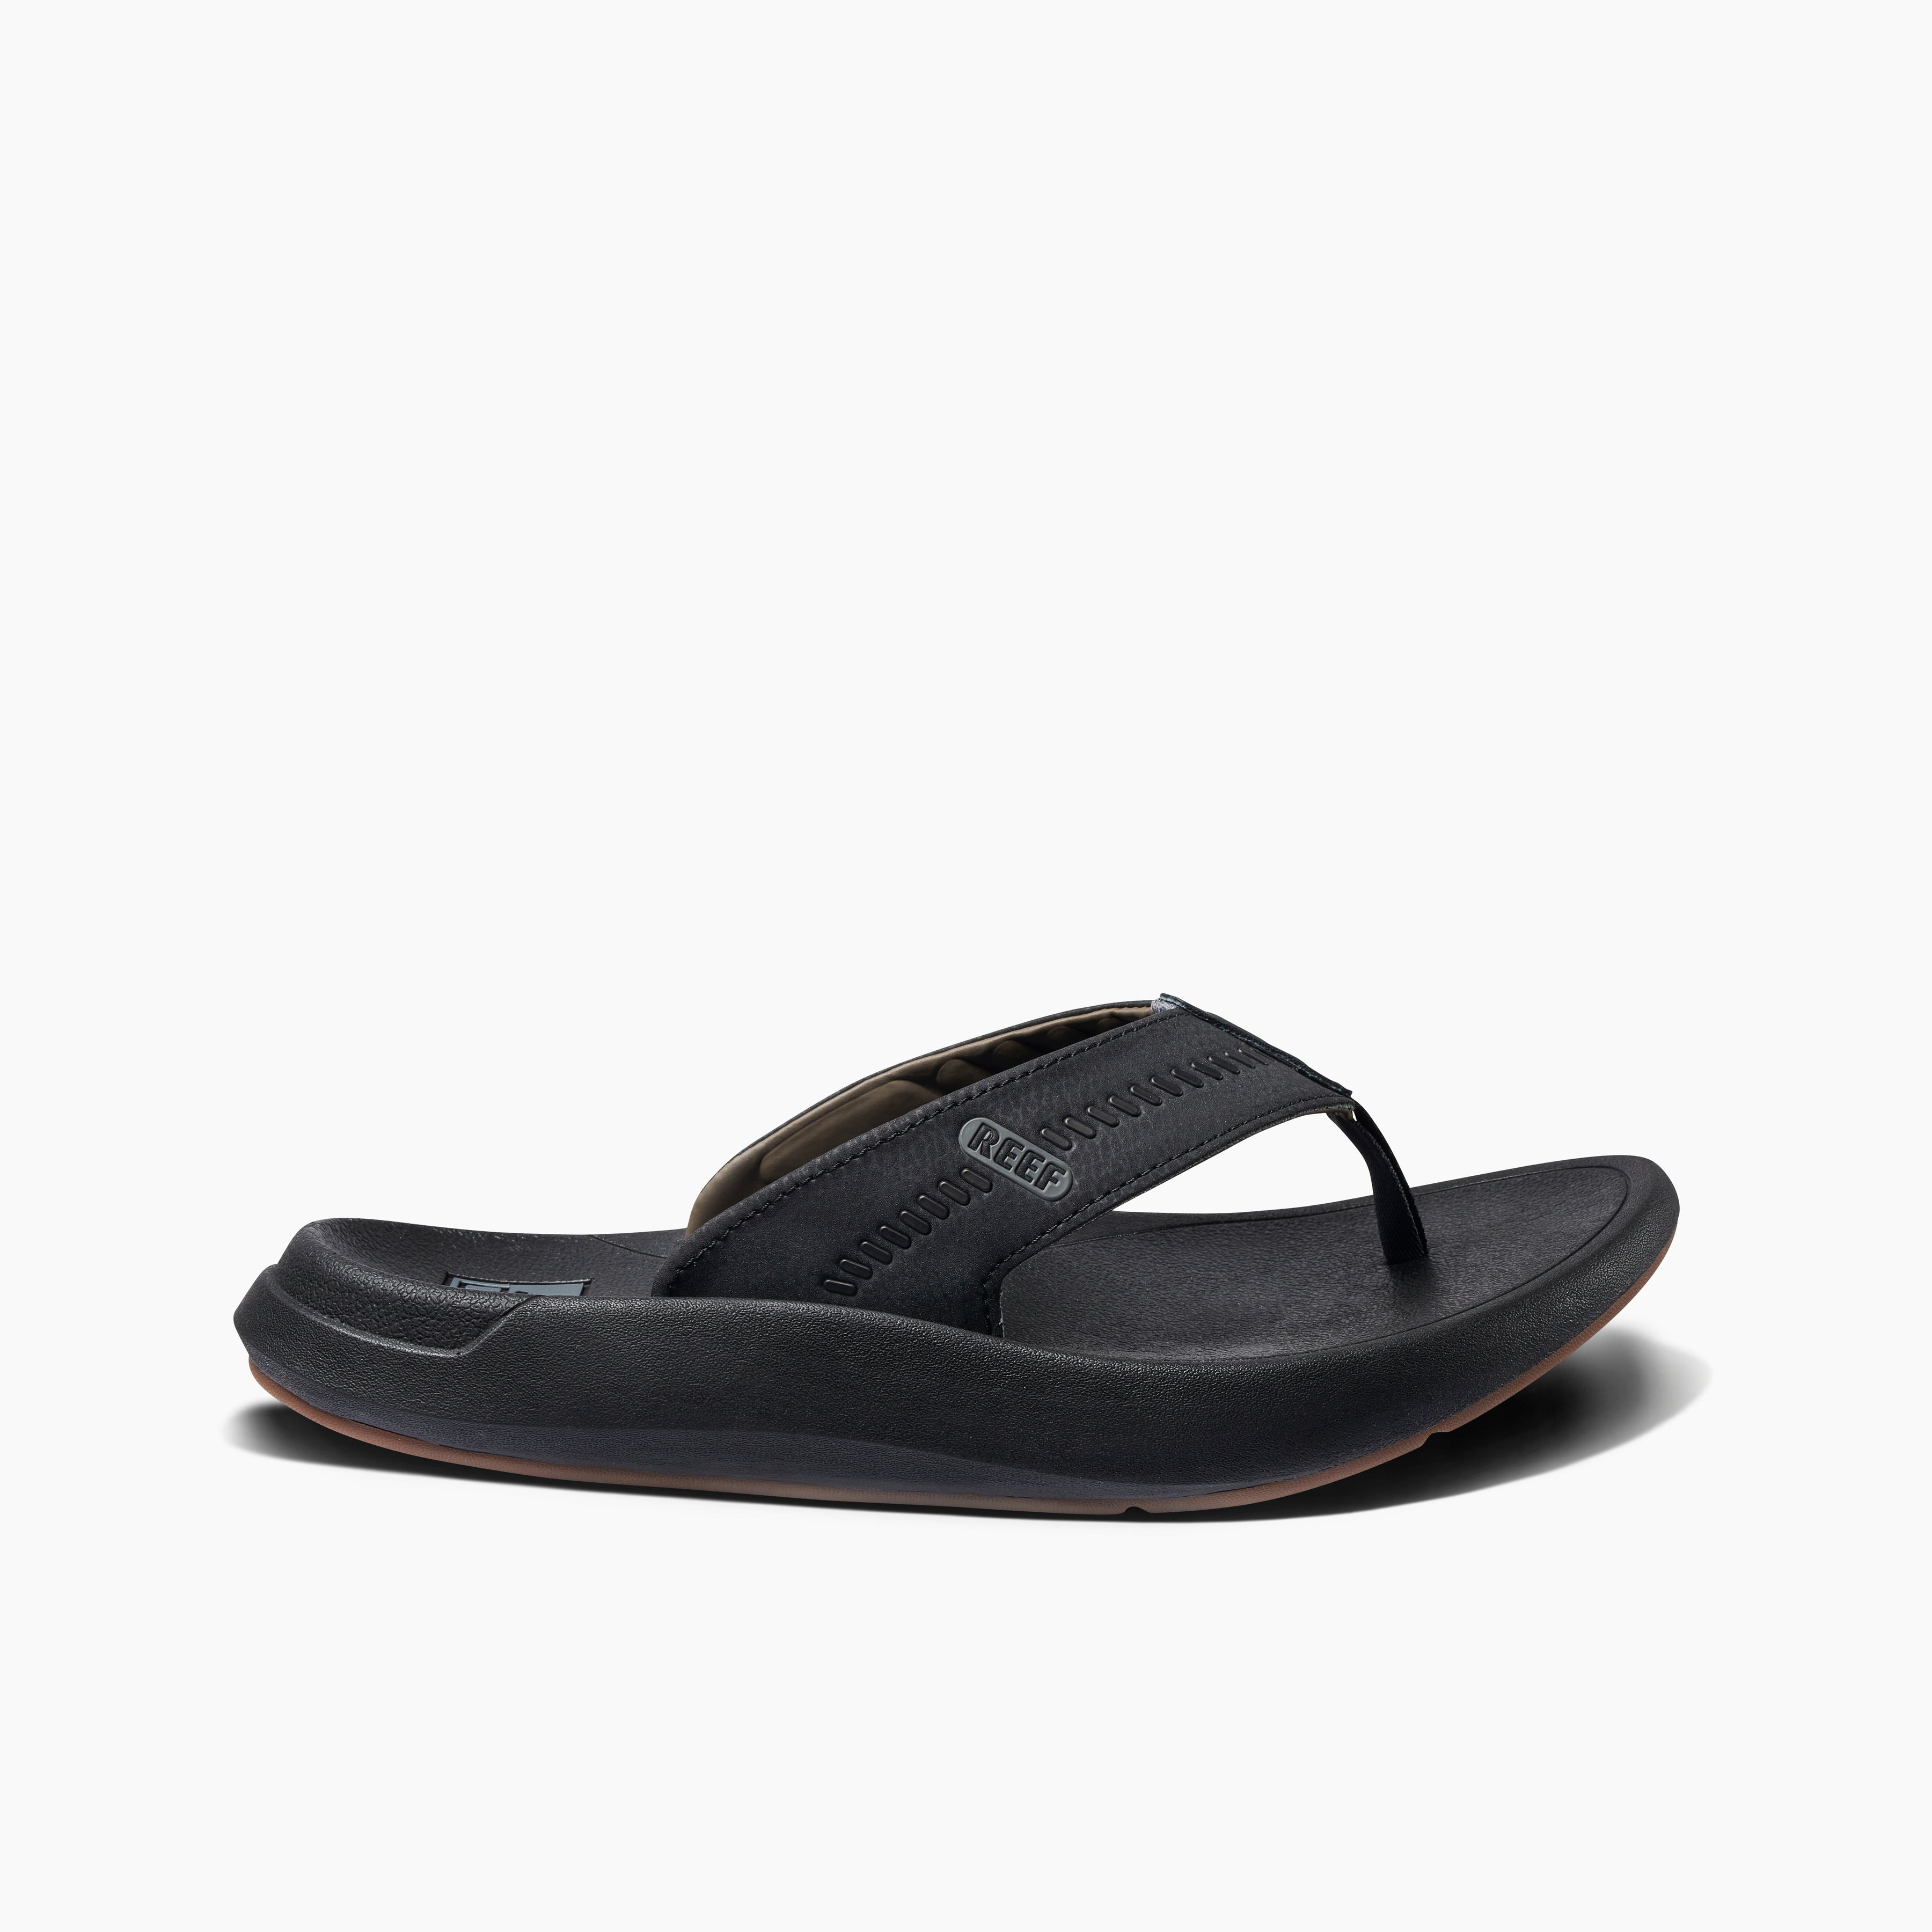 Men's Sandals SWELLsole Cruiser in Black/Grey side view